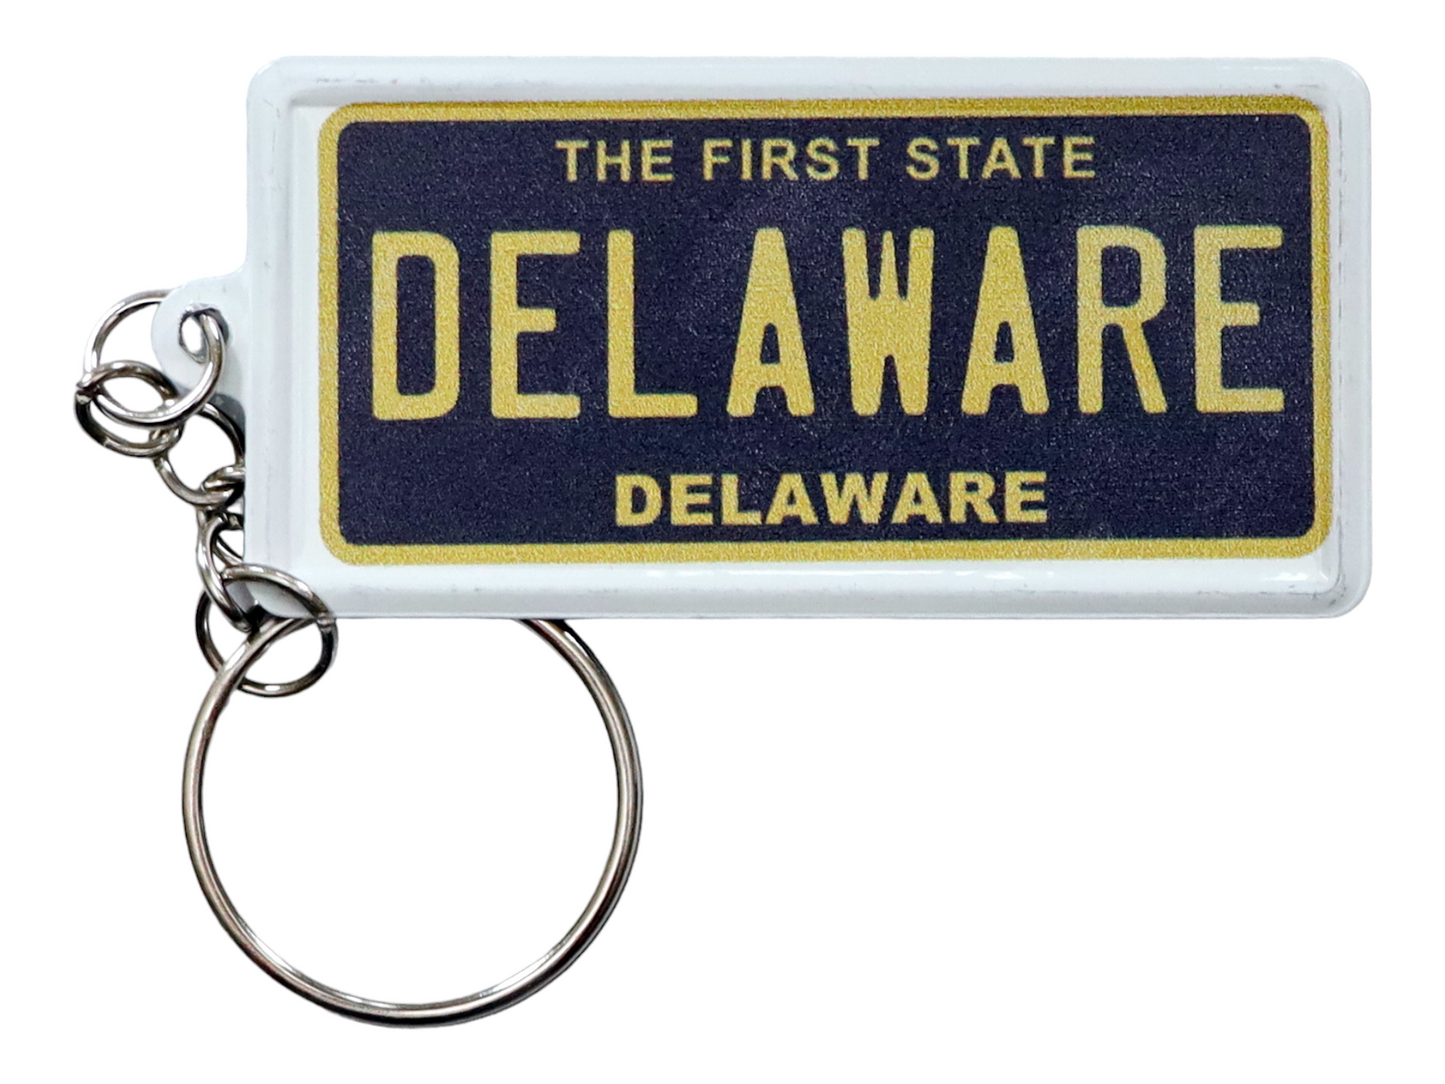 Delaware License Plate Aluminum Ultra-Slim Rectangular Souvenir Keychain 2.5" X 1.25"x 0.06"